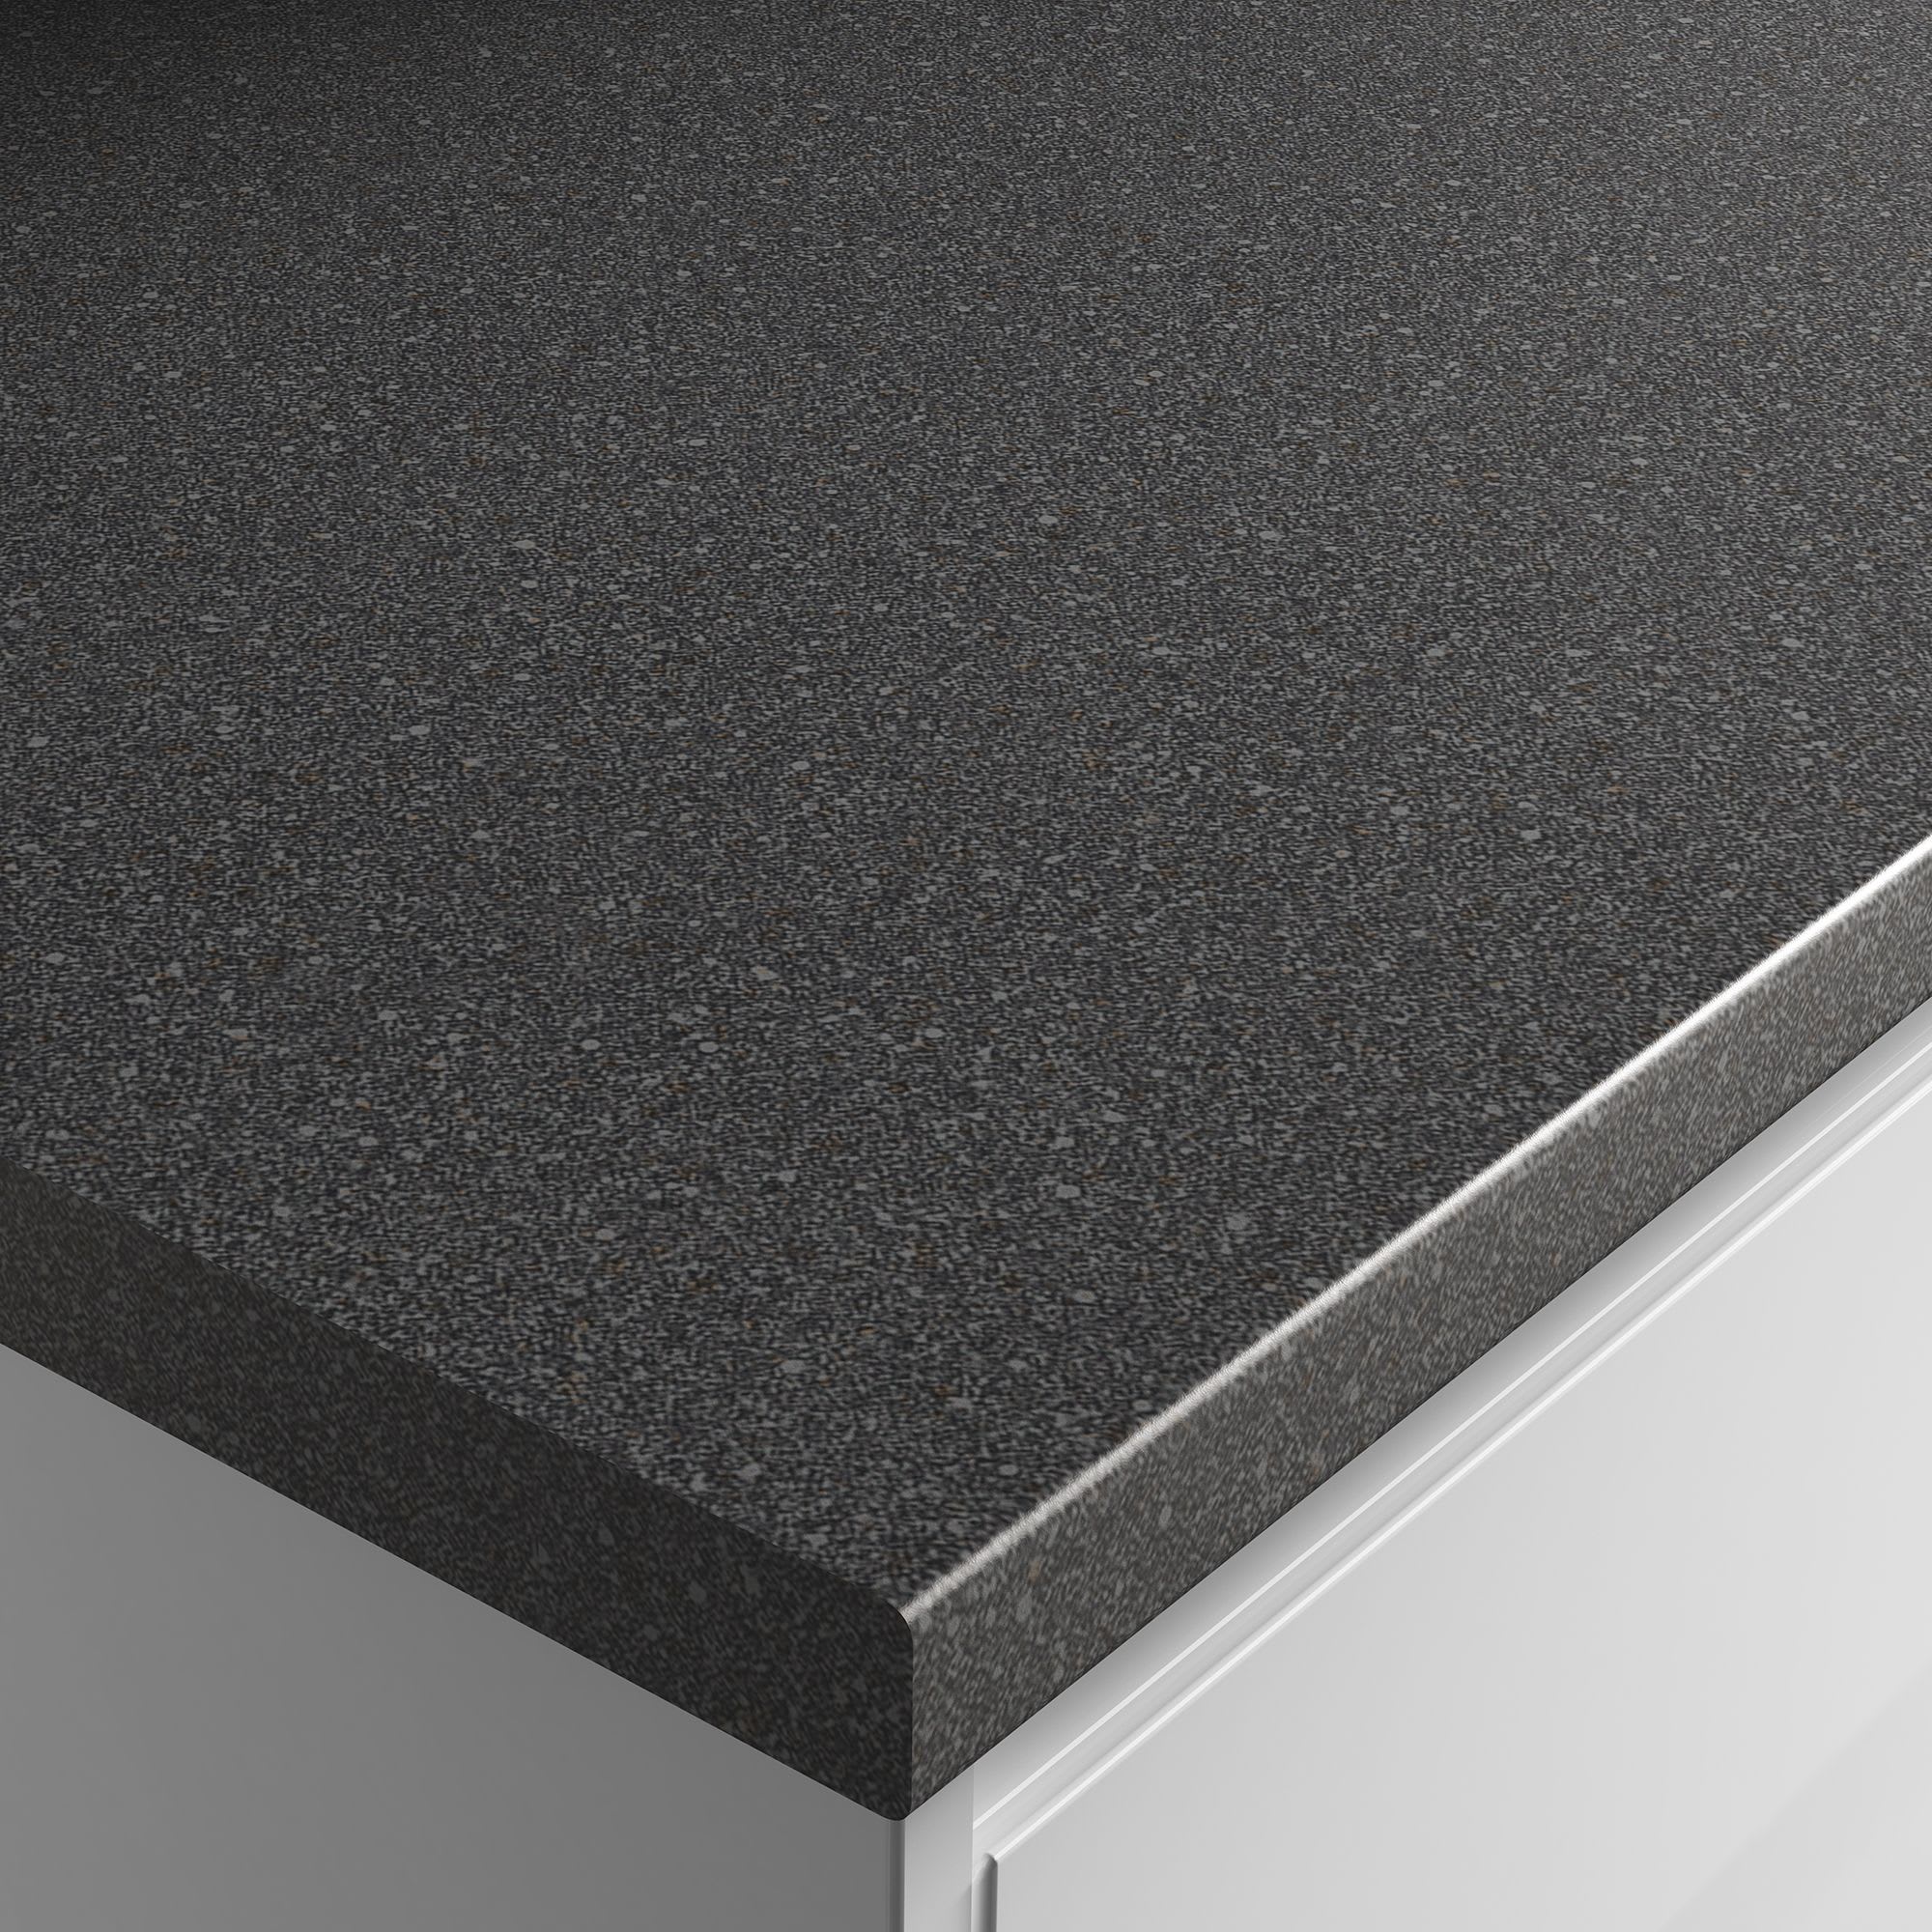 Noir Granite Laminate Worktop - 600mm x 28mm